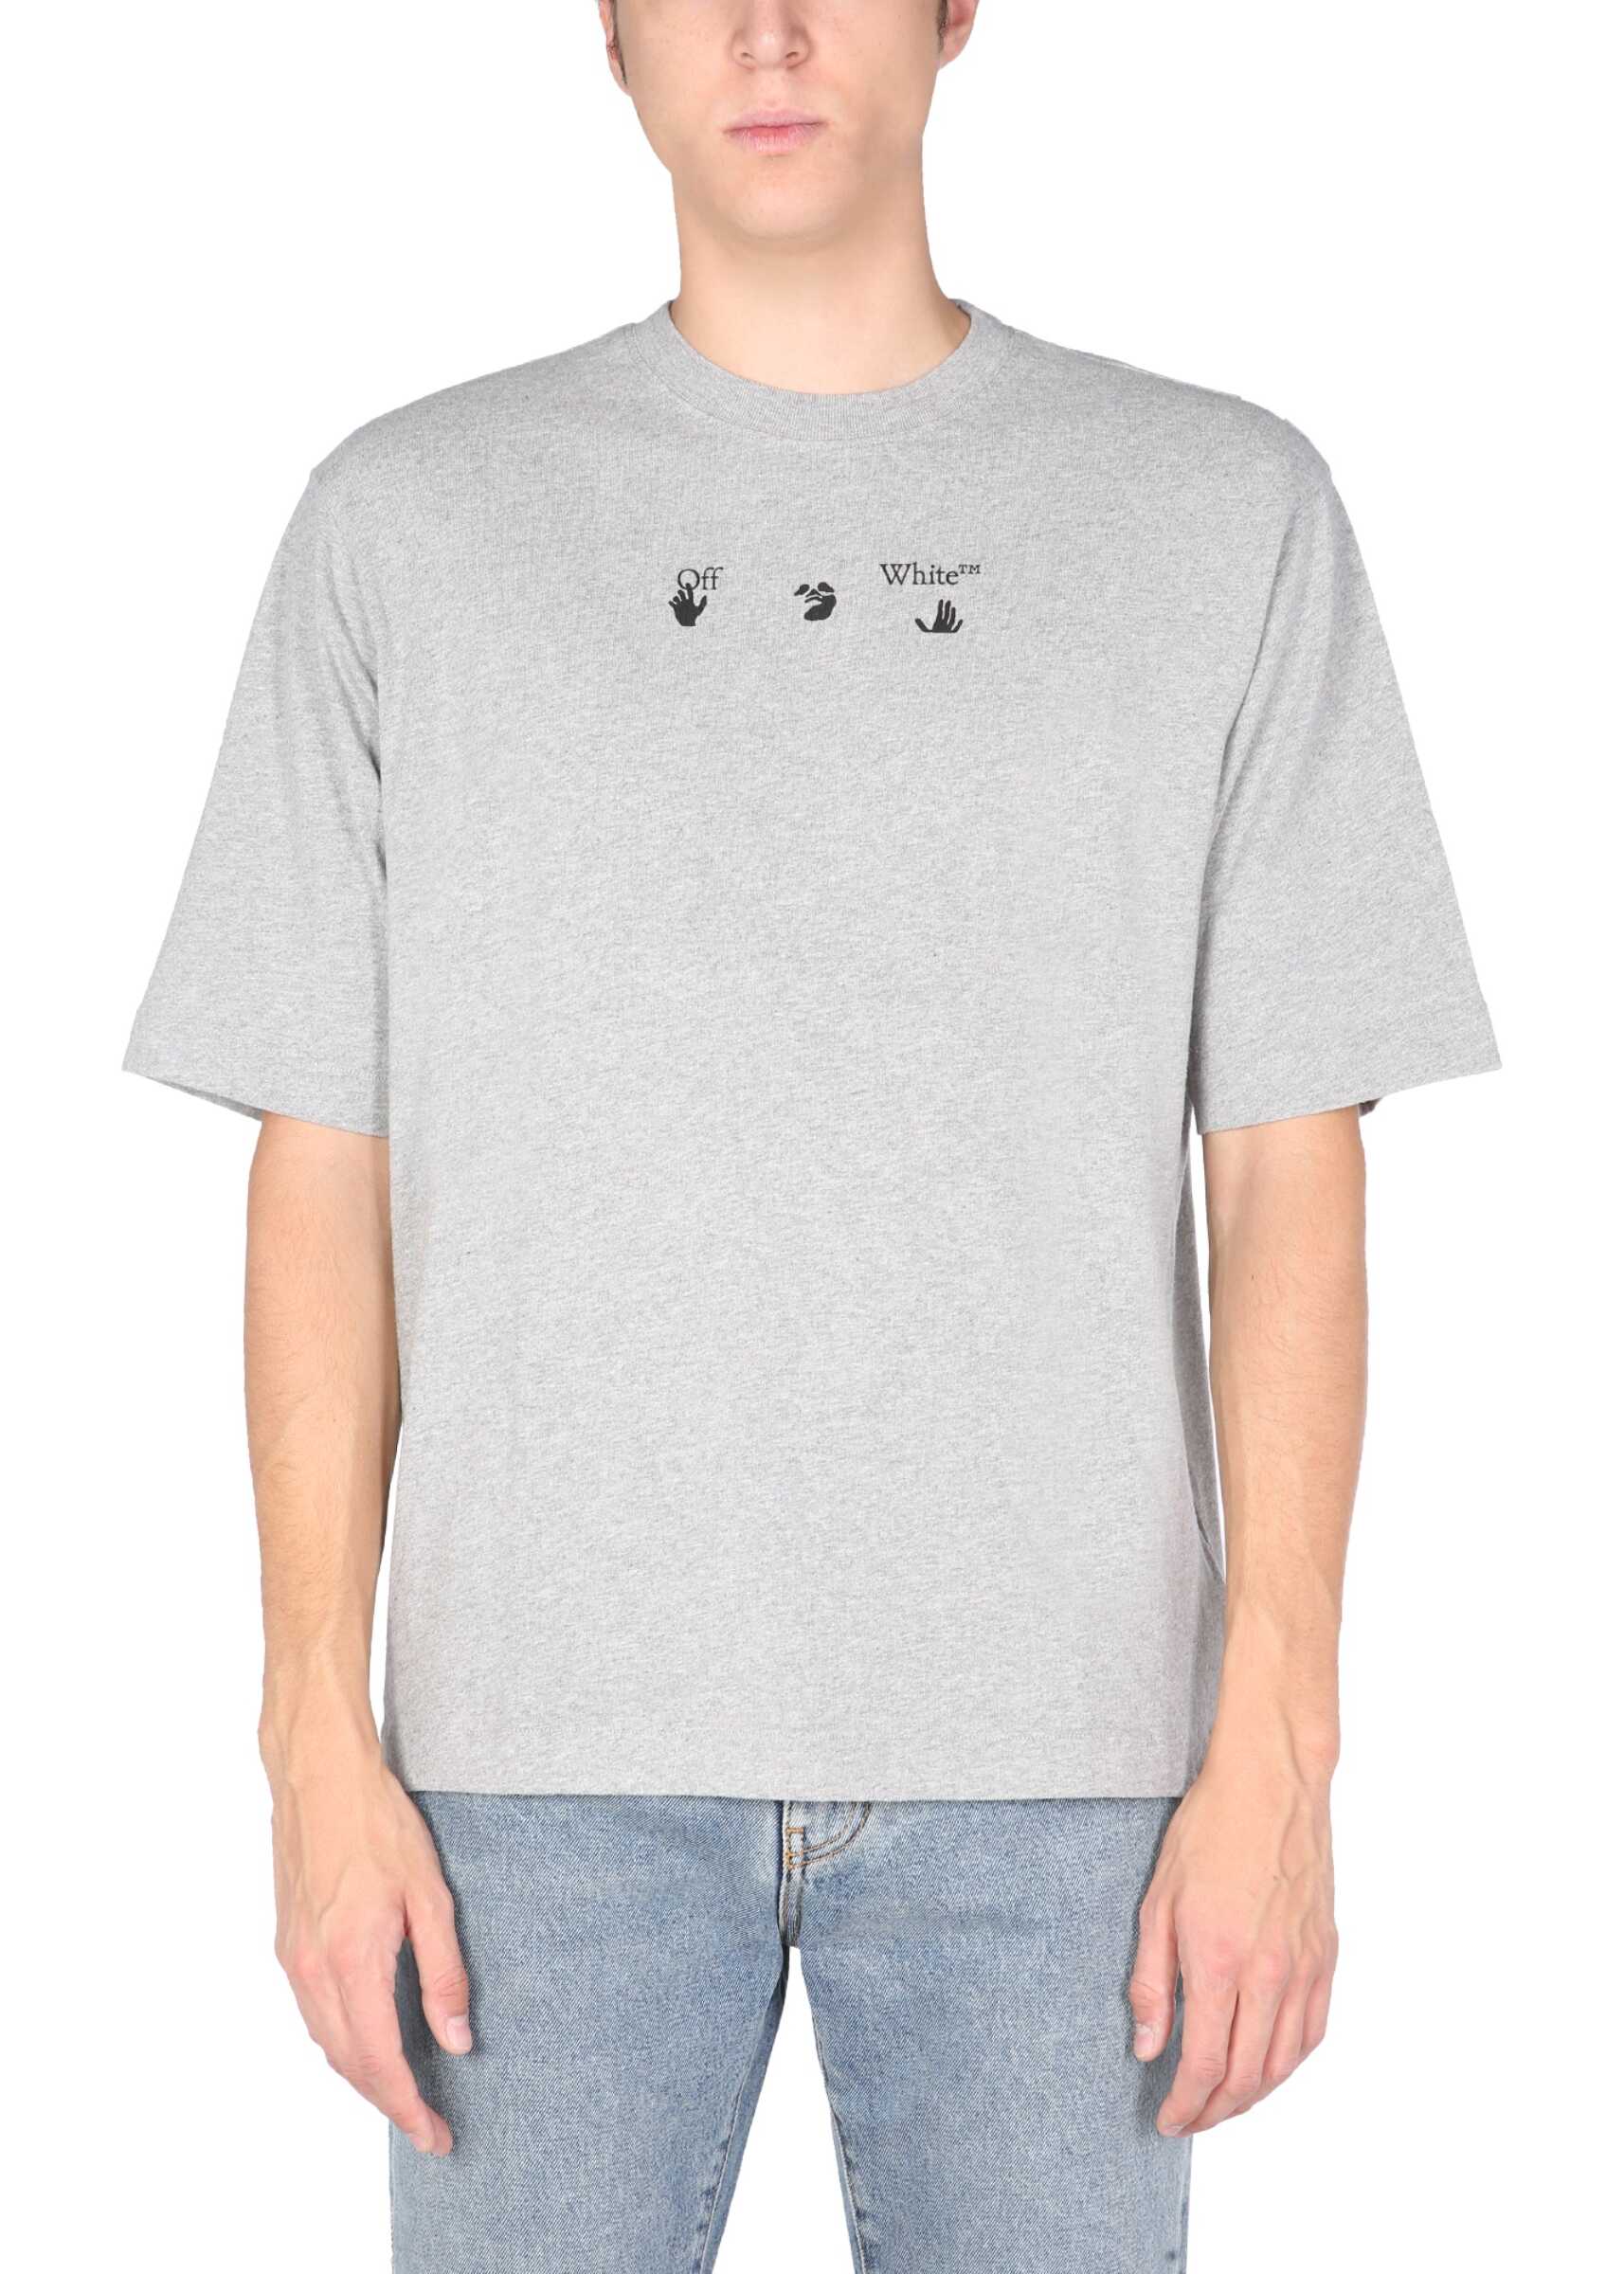 Off-White "Negative Arrow" T-Shirt OMAA119_F21JER0220810 GREY